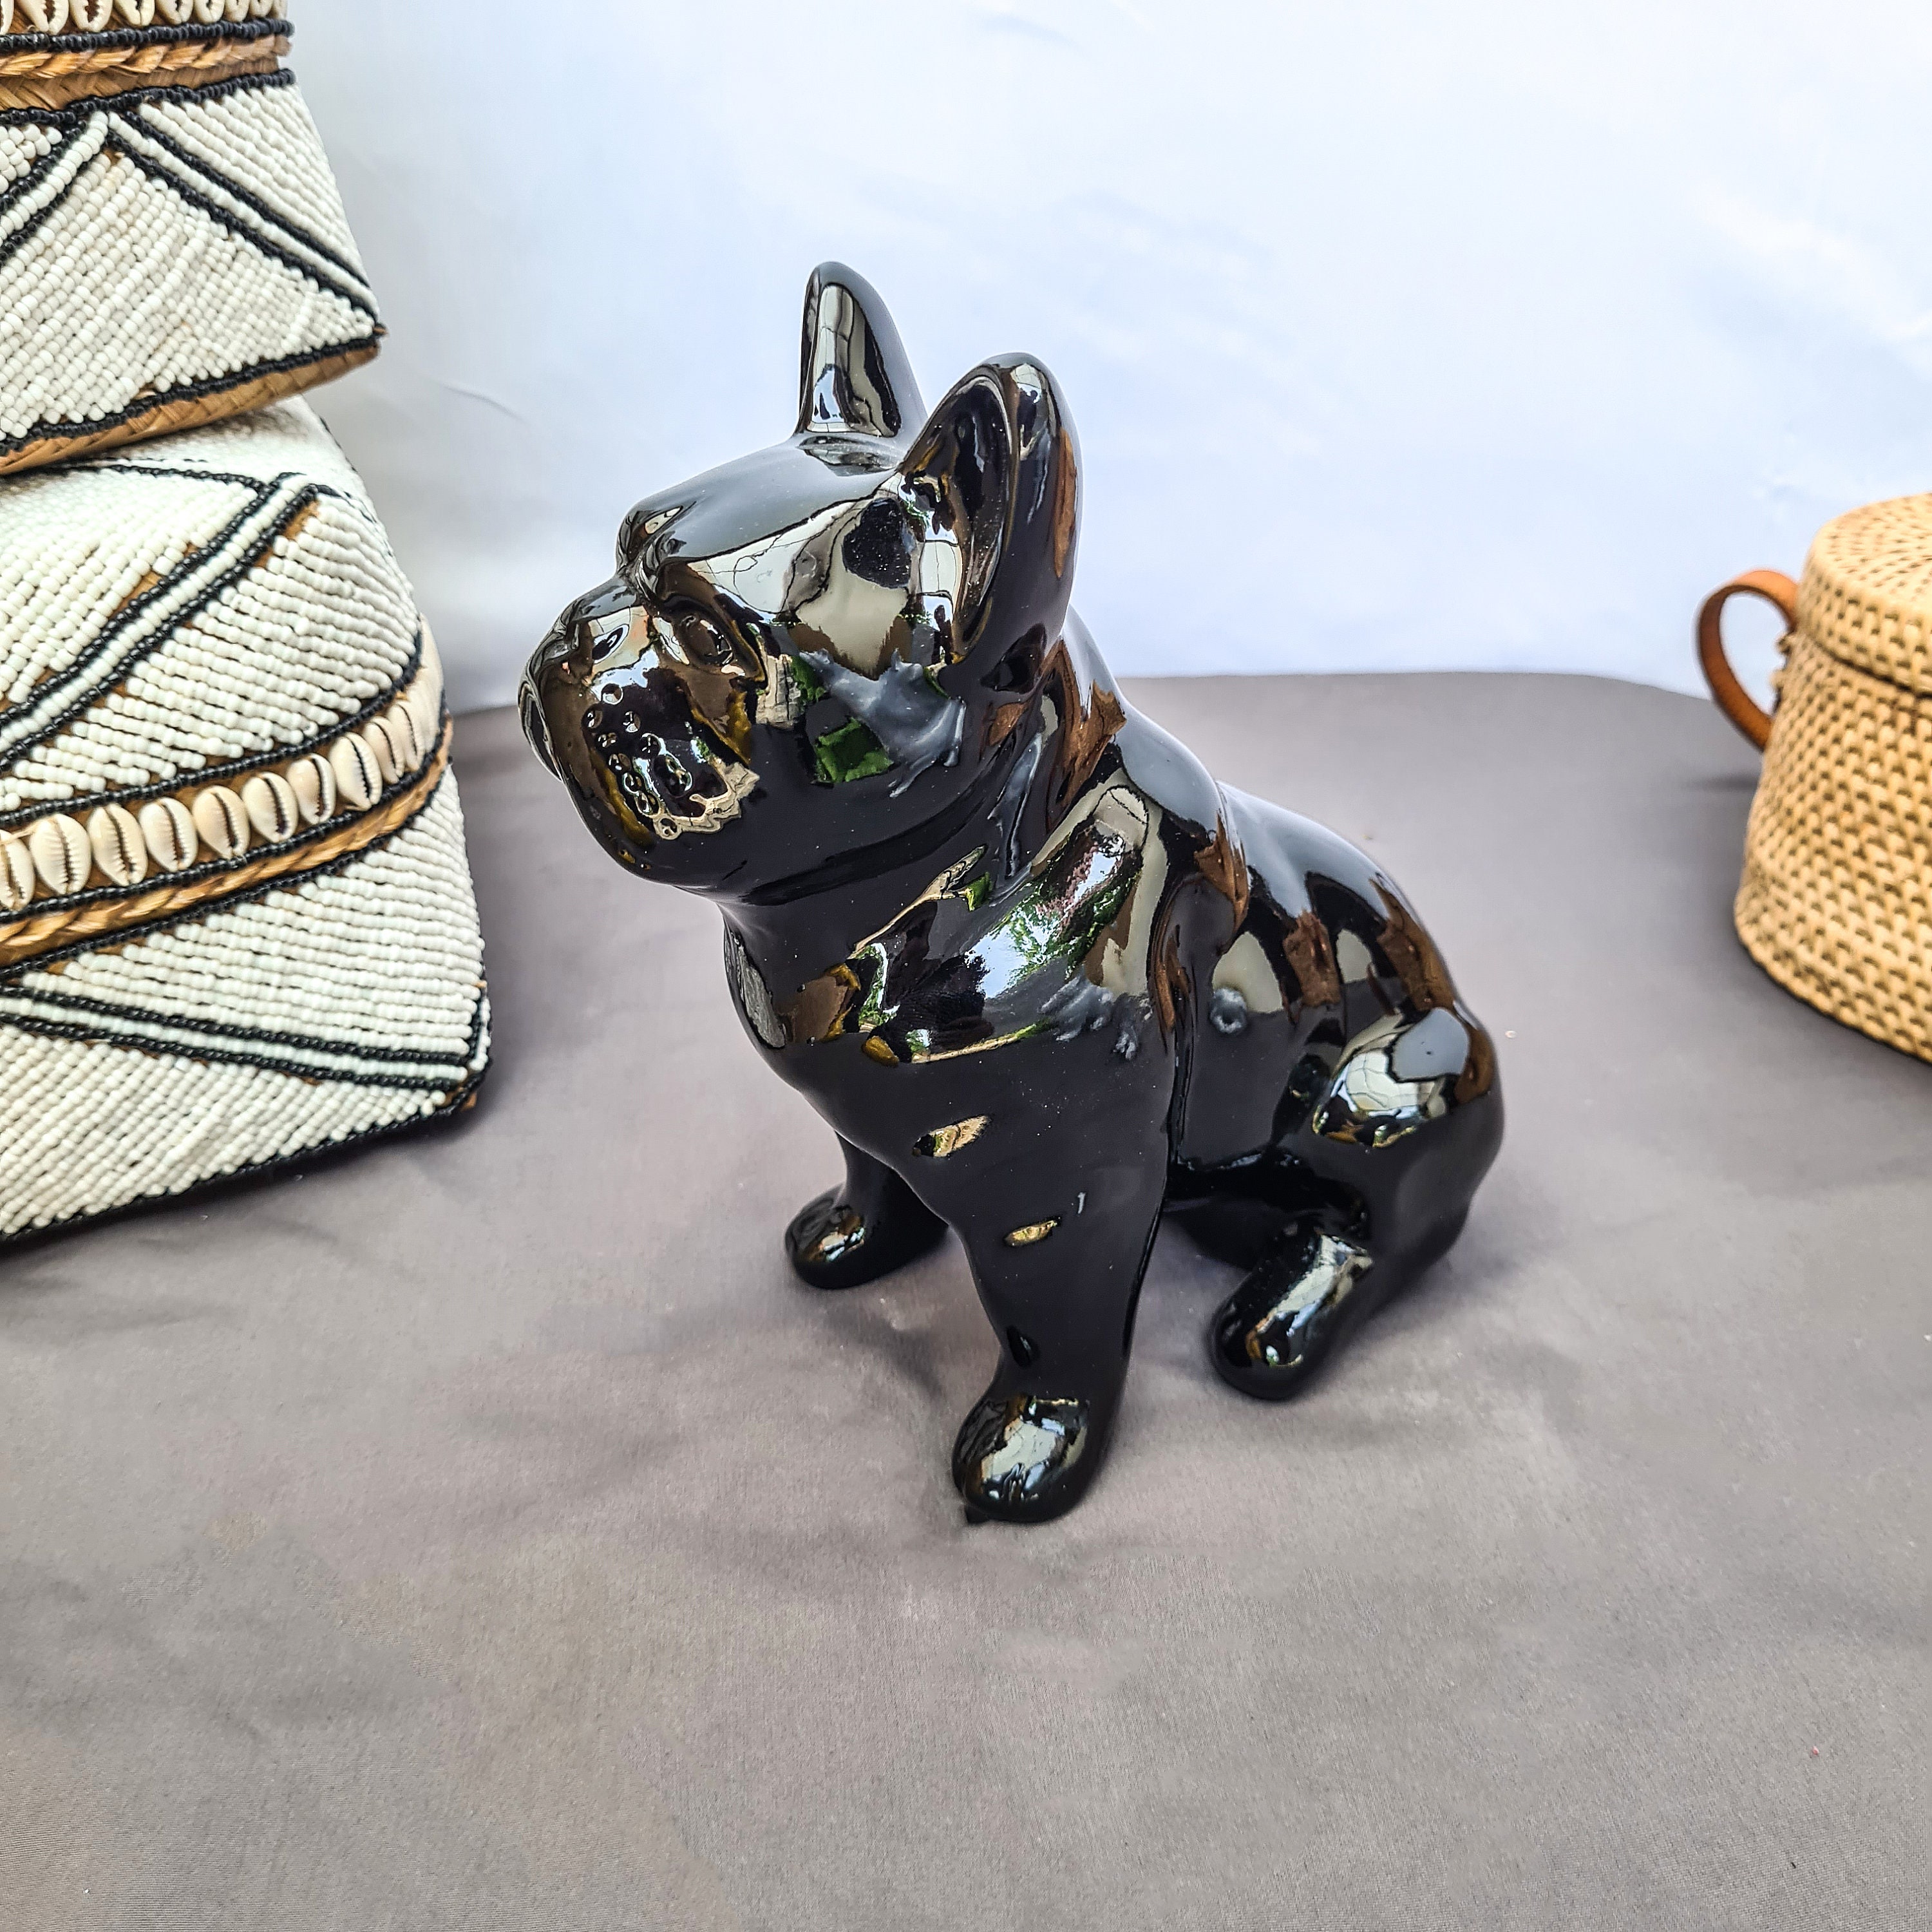 Large Sitting Fiberglass Bulldog Figure - Single Color